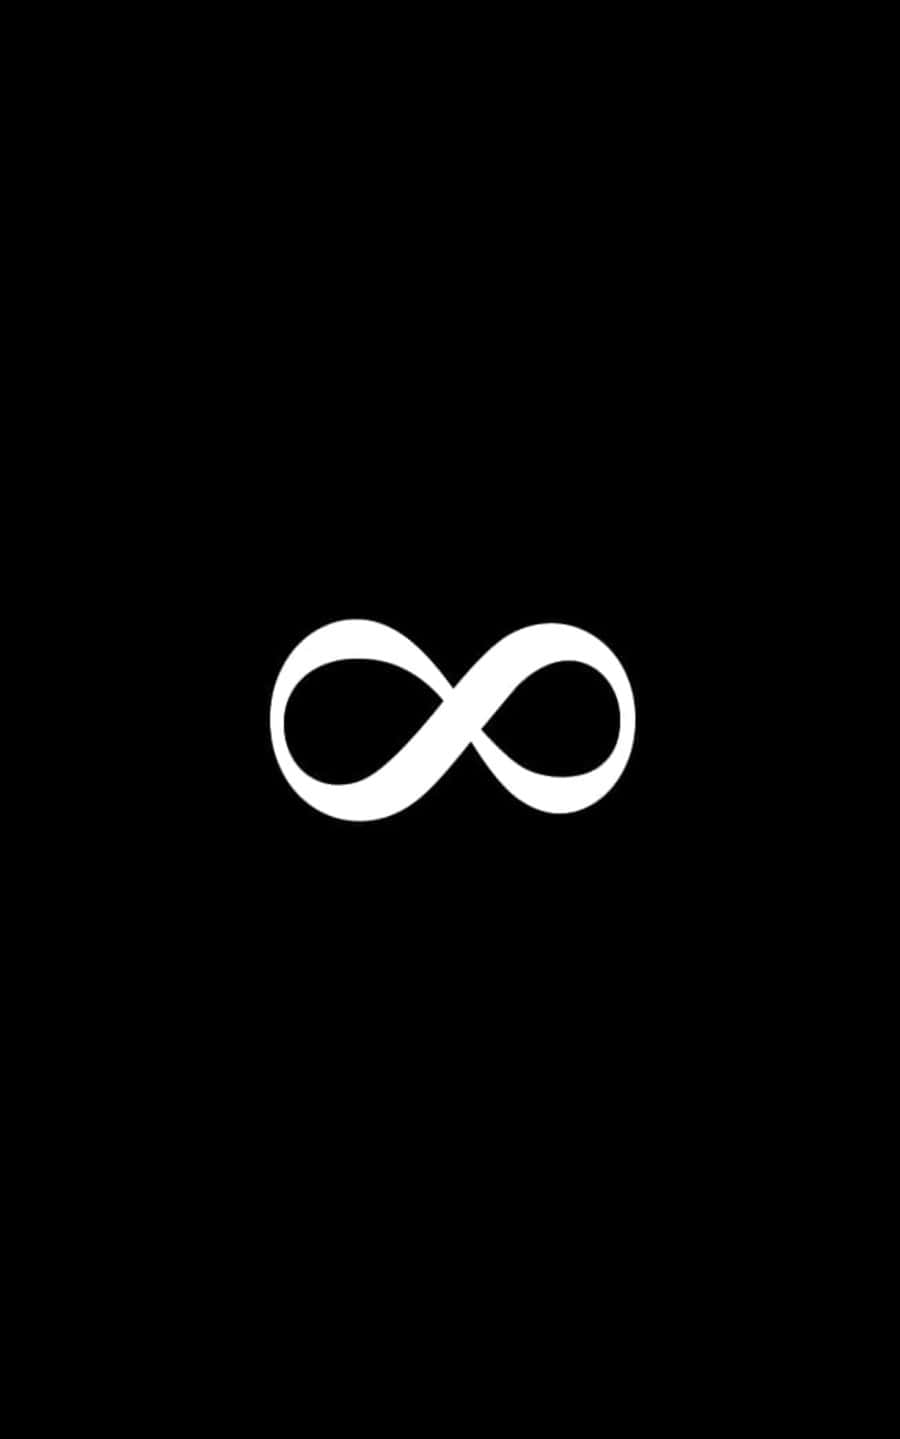 ∞ Black  Infinity sign wallpaper, Infinity wallpaper, Infinite logo